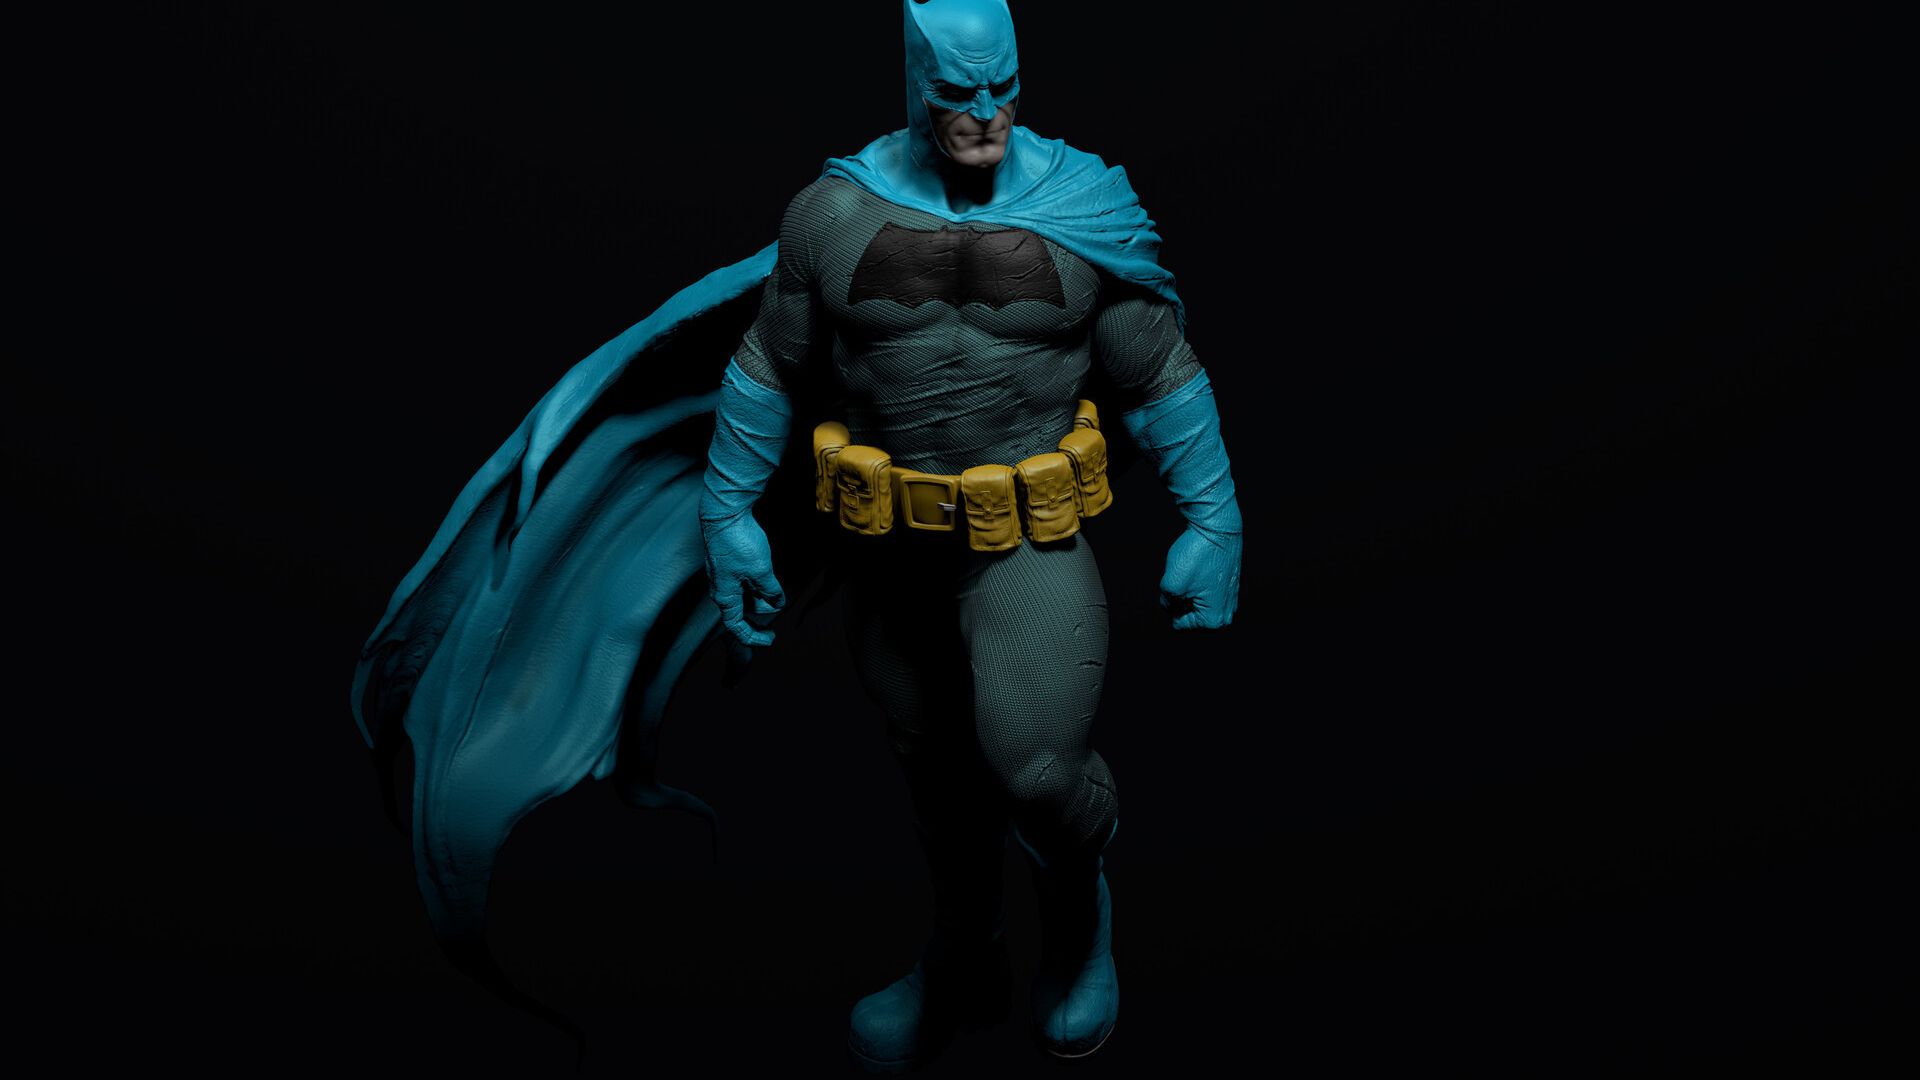 Desktop Wallpaper The Batman By Bosslogic, Superhero, Hd Image, Picture,  Background, 5730ff